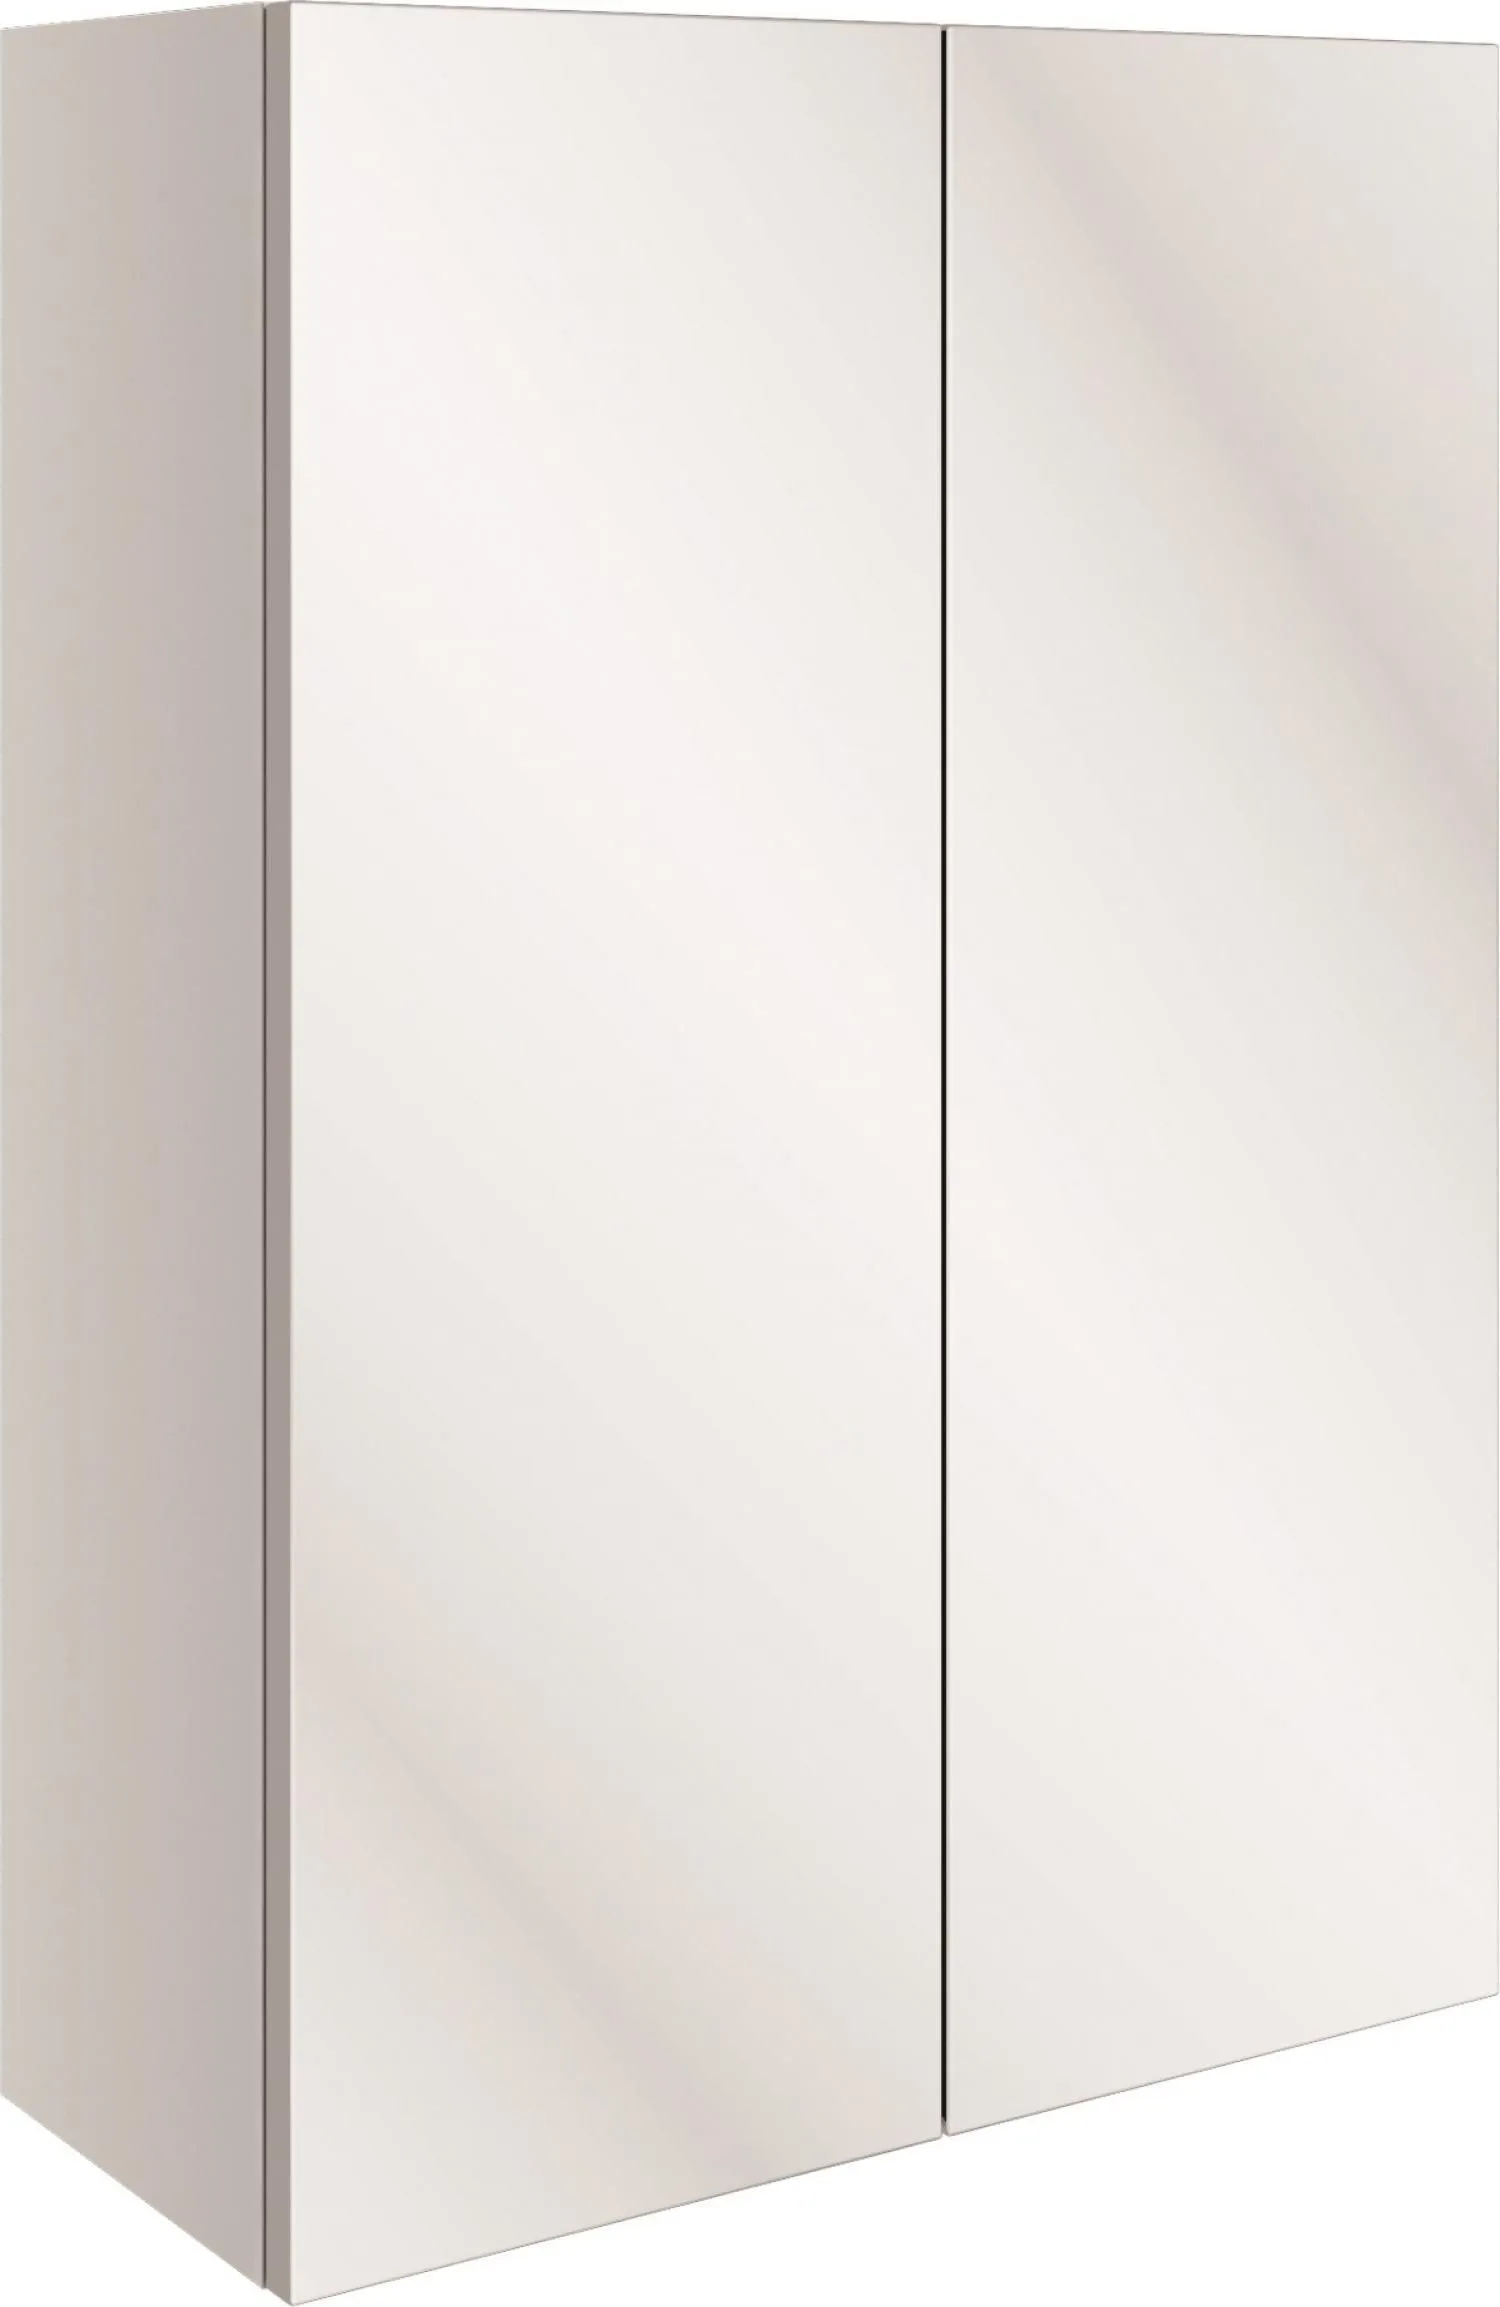 BTL Valesso Mirrored Unit H720 x W600 x D218mm White Gloss